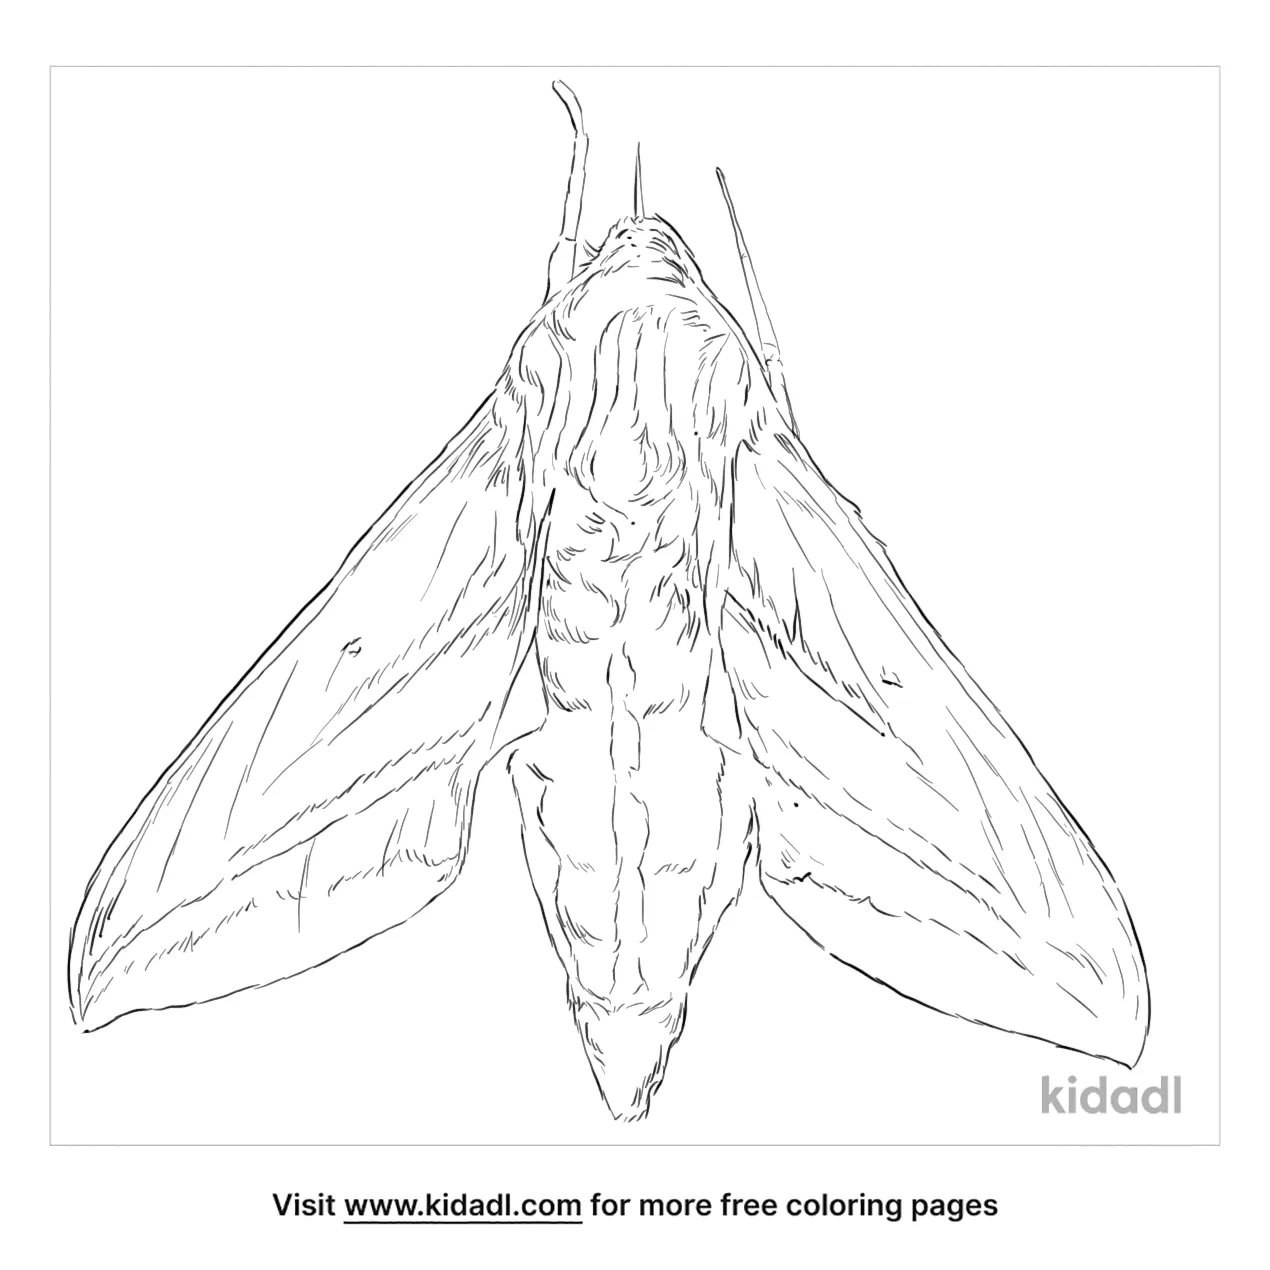 Elephant Hawk-Moth Coloring Page